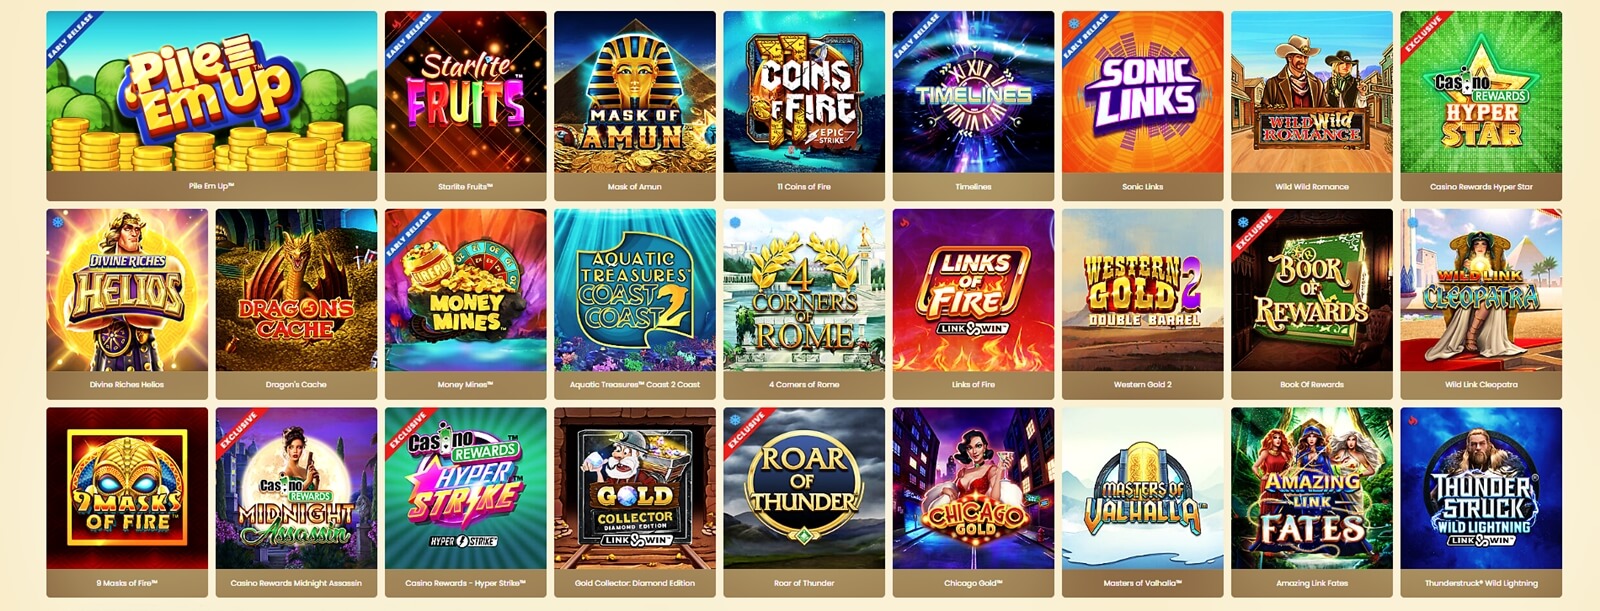 Captain Cooks Online Casino Games